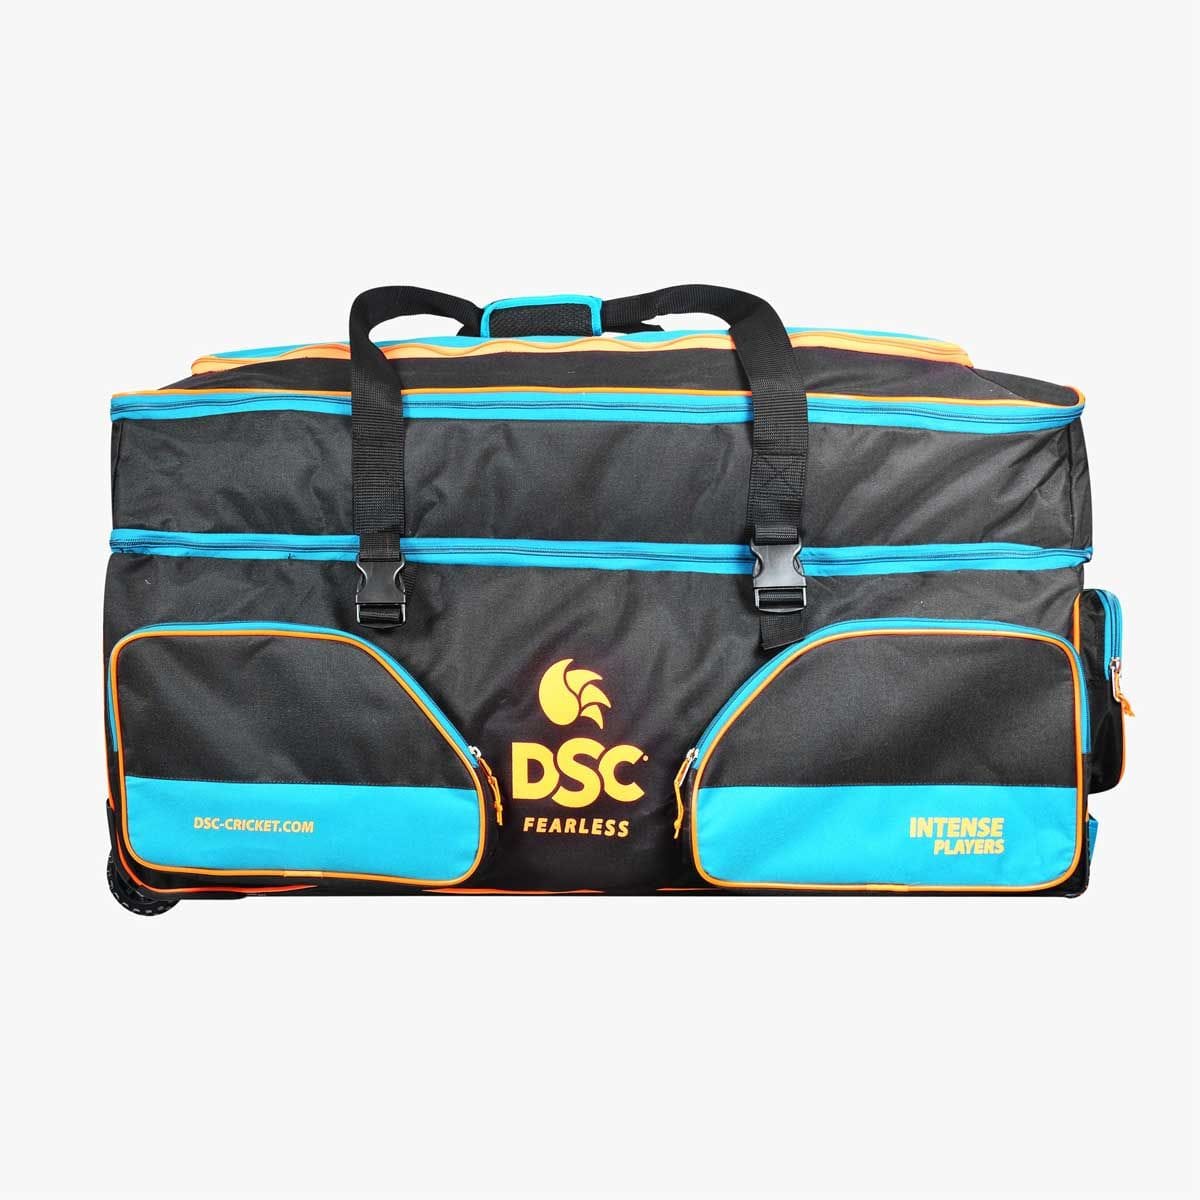 Adidas Cricket Bags DSC Intense Player Wheels Cricket Bag